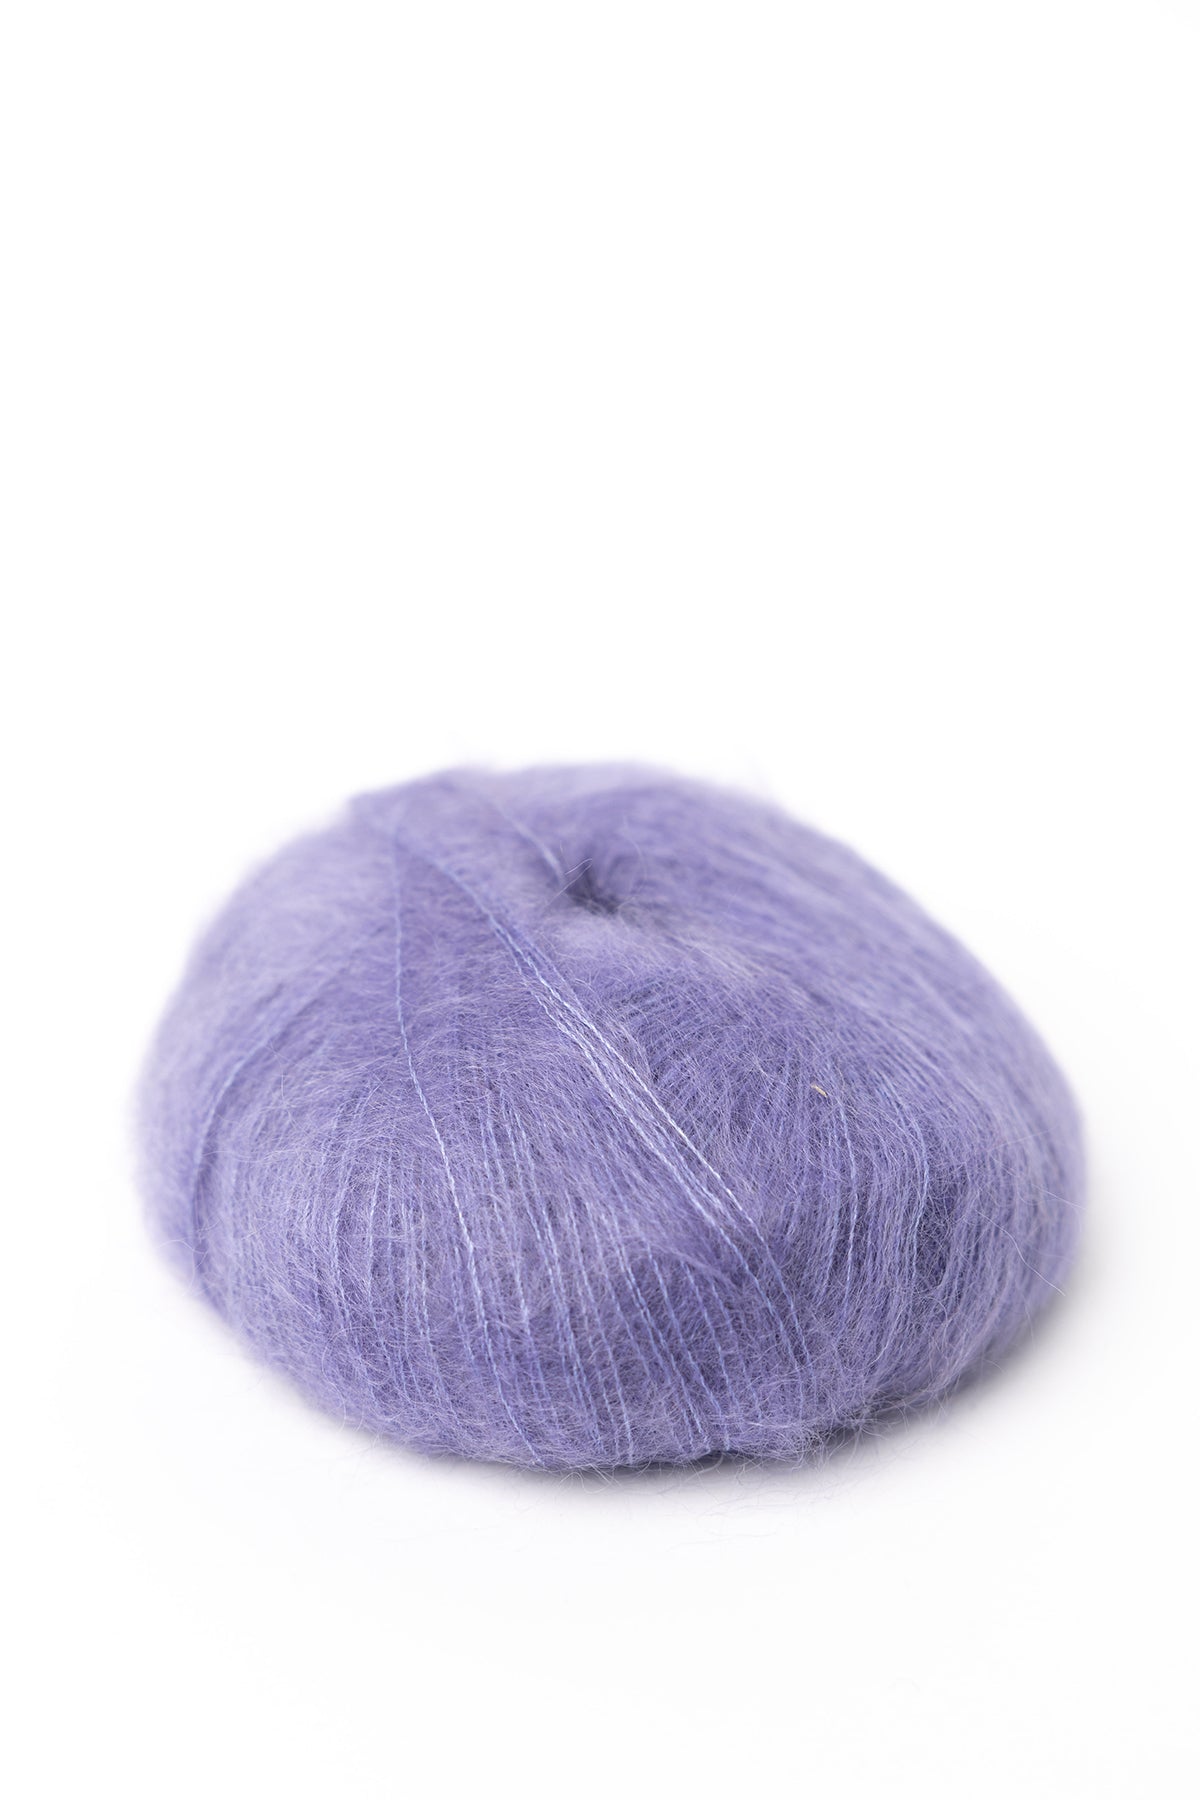 Drops Kid Silk - Bright Sand (54) - 25g - Wool Warehouse - Buy Yarn, Wool,  Needles & Other Knitting Supplies Online!